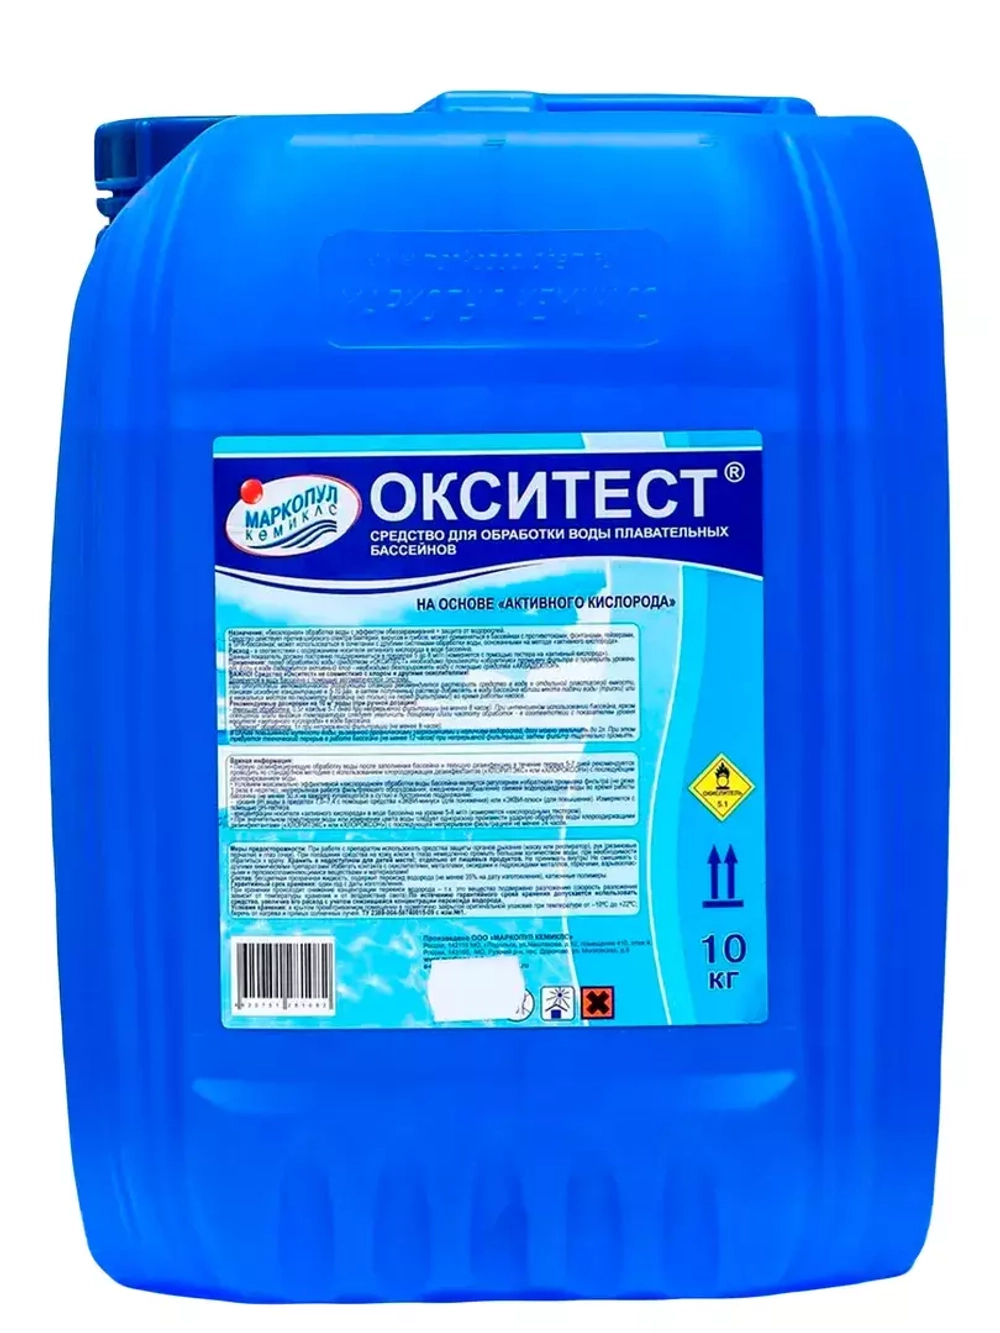 Окситест - 10л - Активный кислород для бассейна - Маркопул Кемиклс